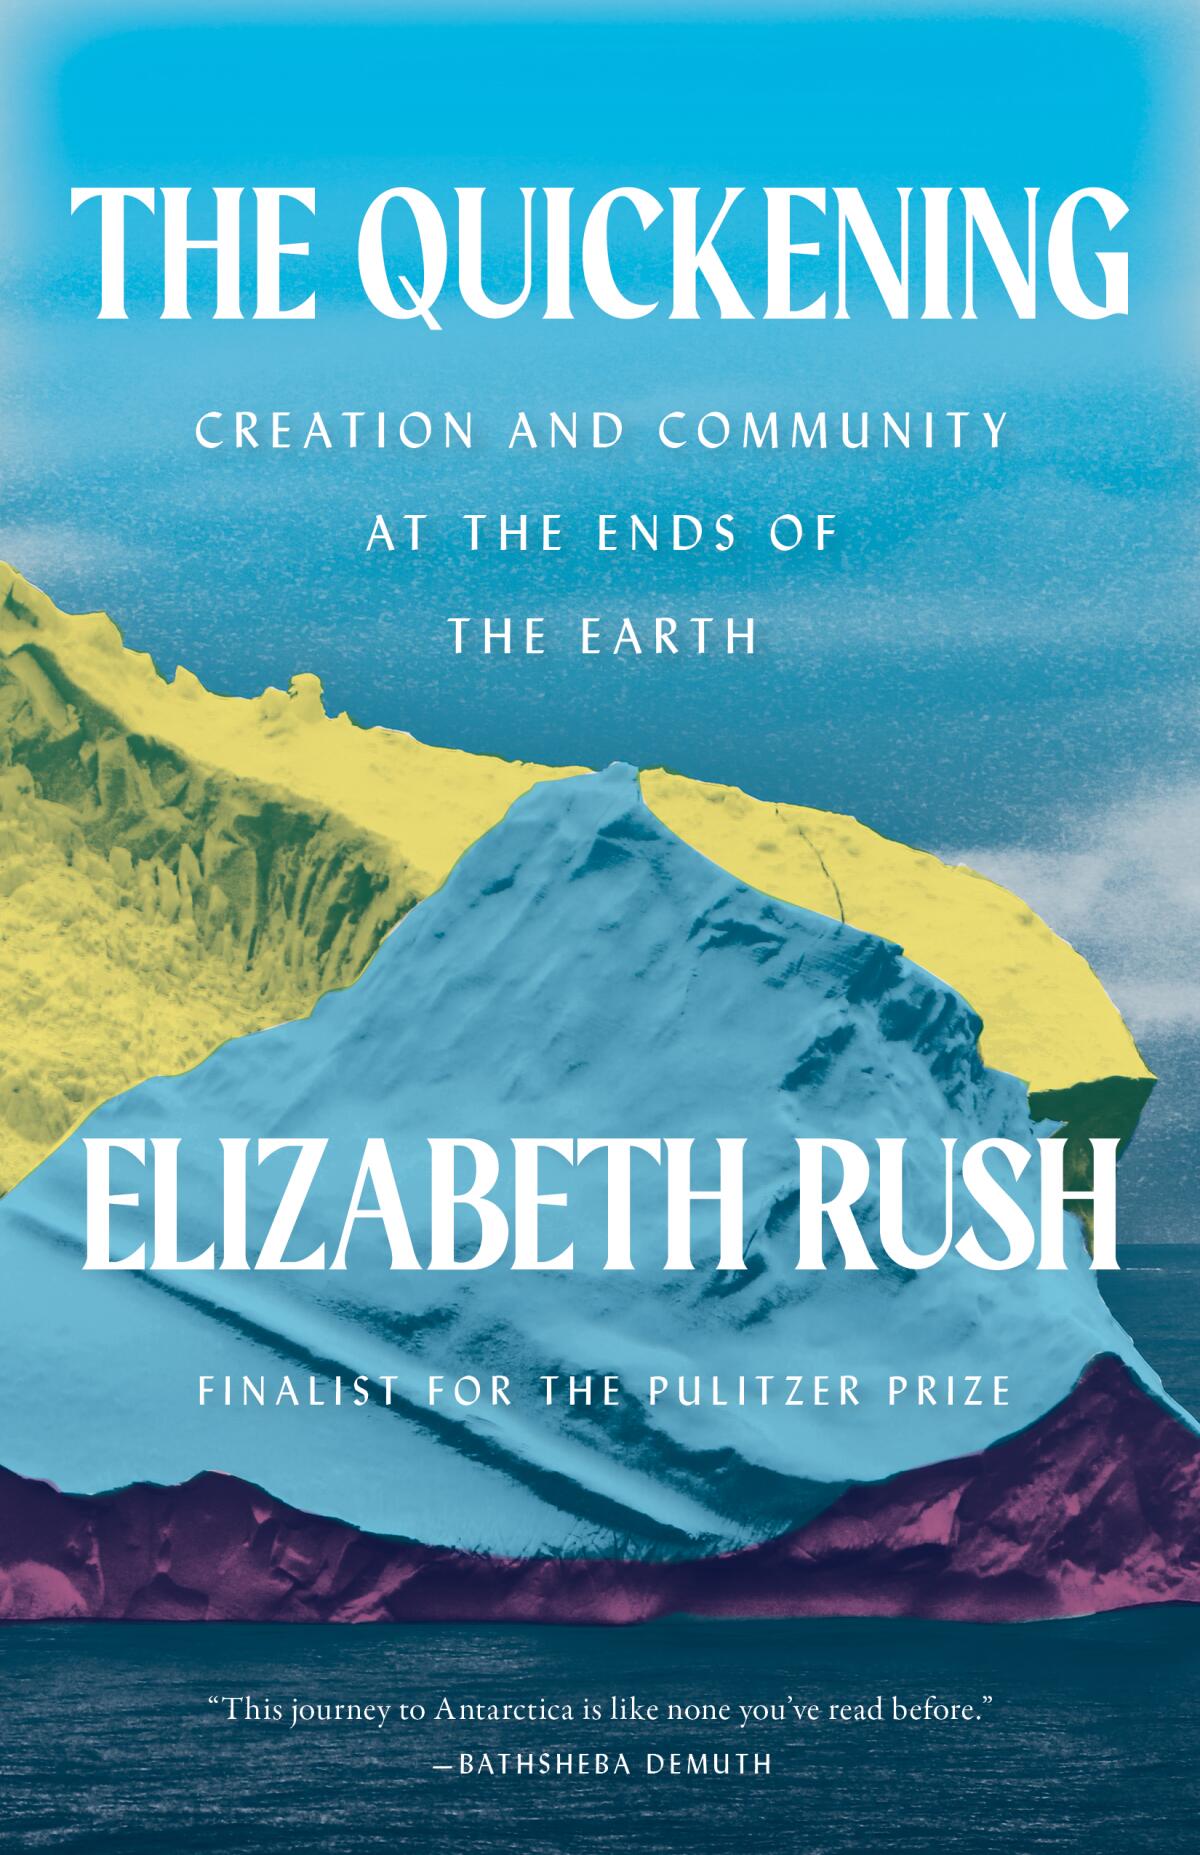 "The Quickening," by Elizabeth Rush